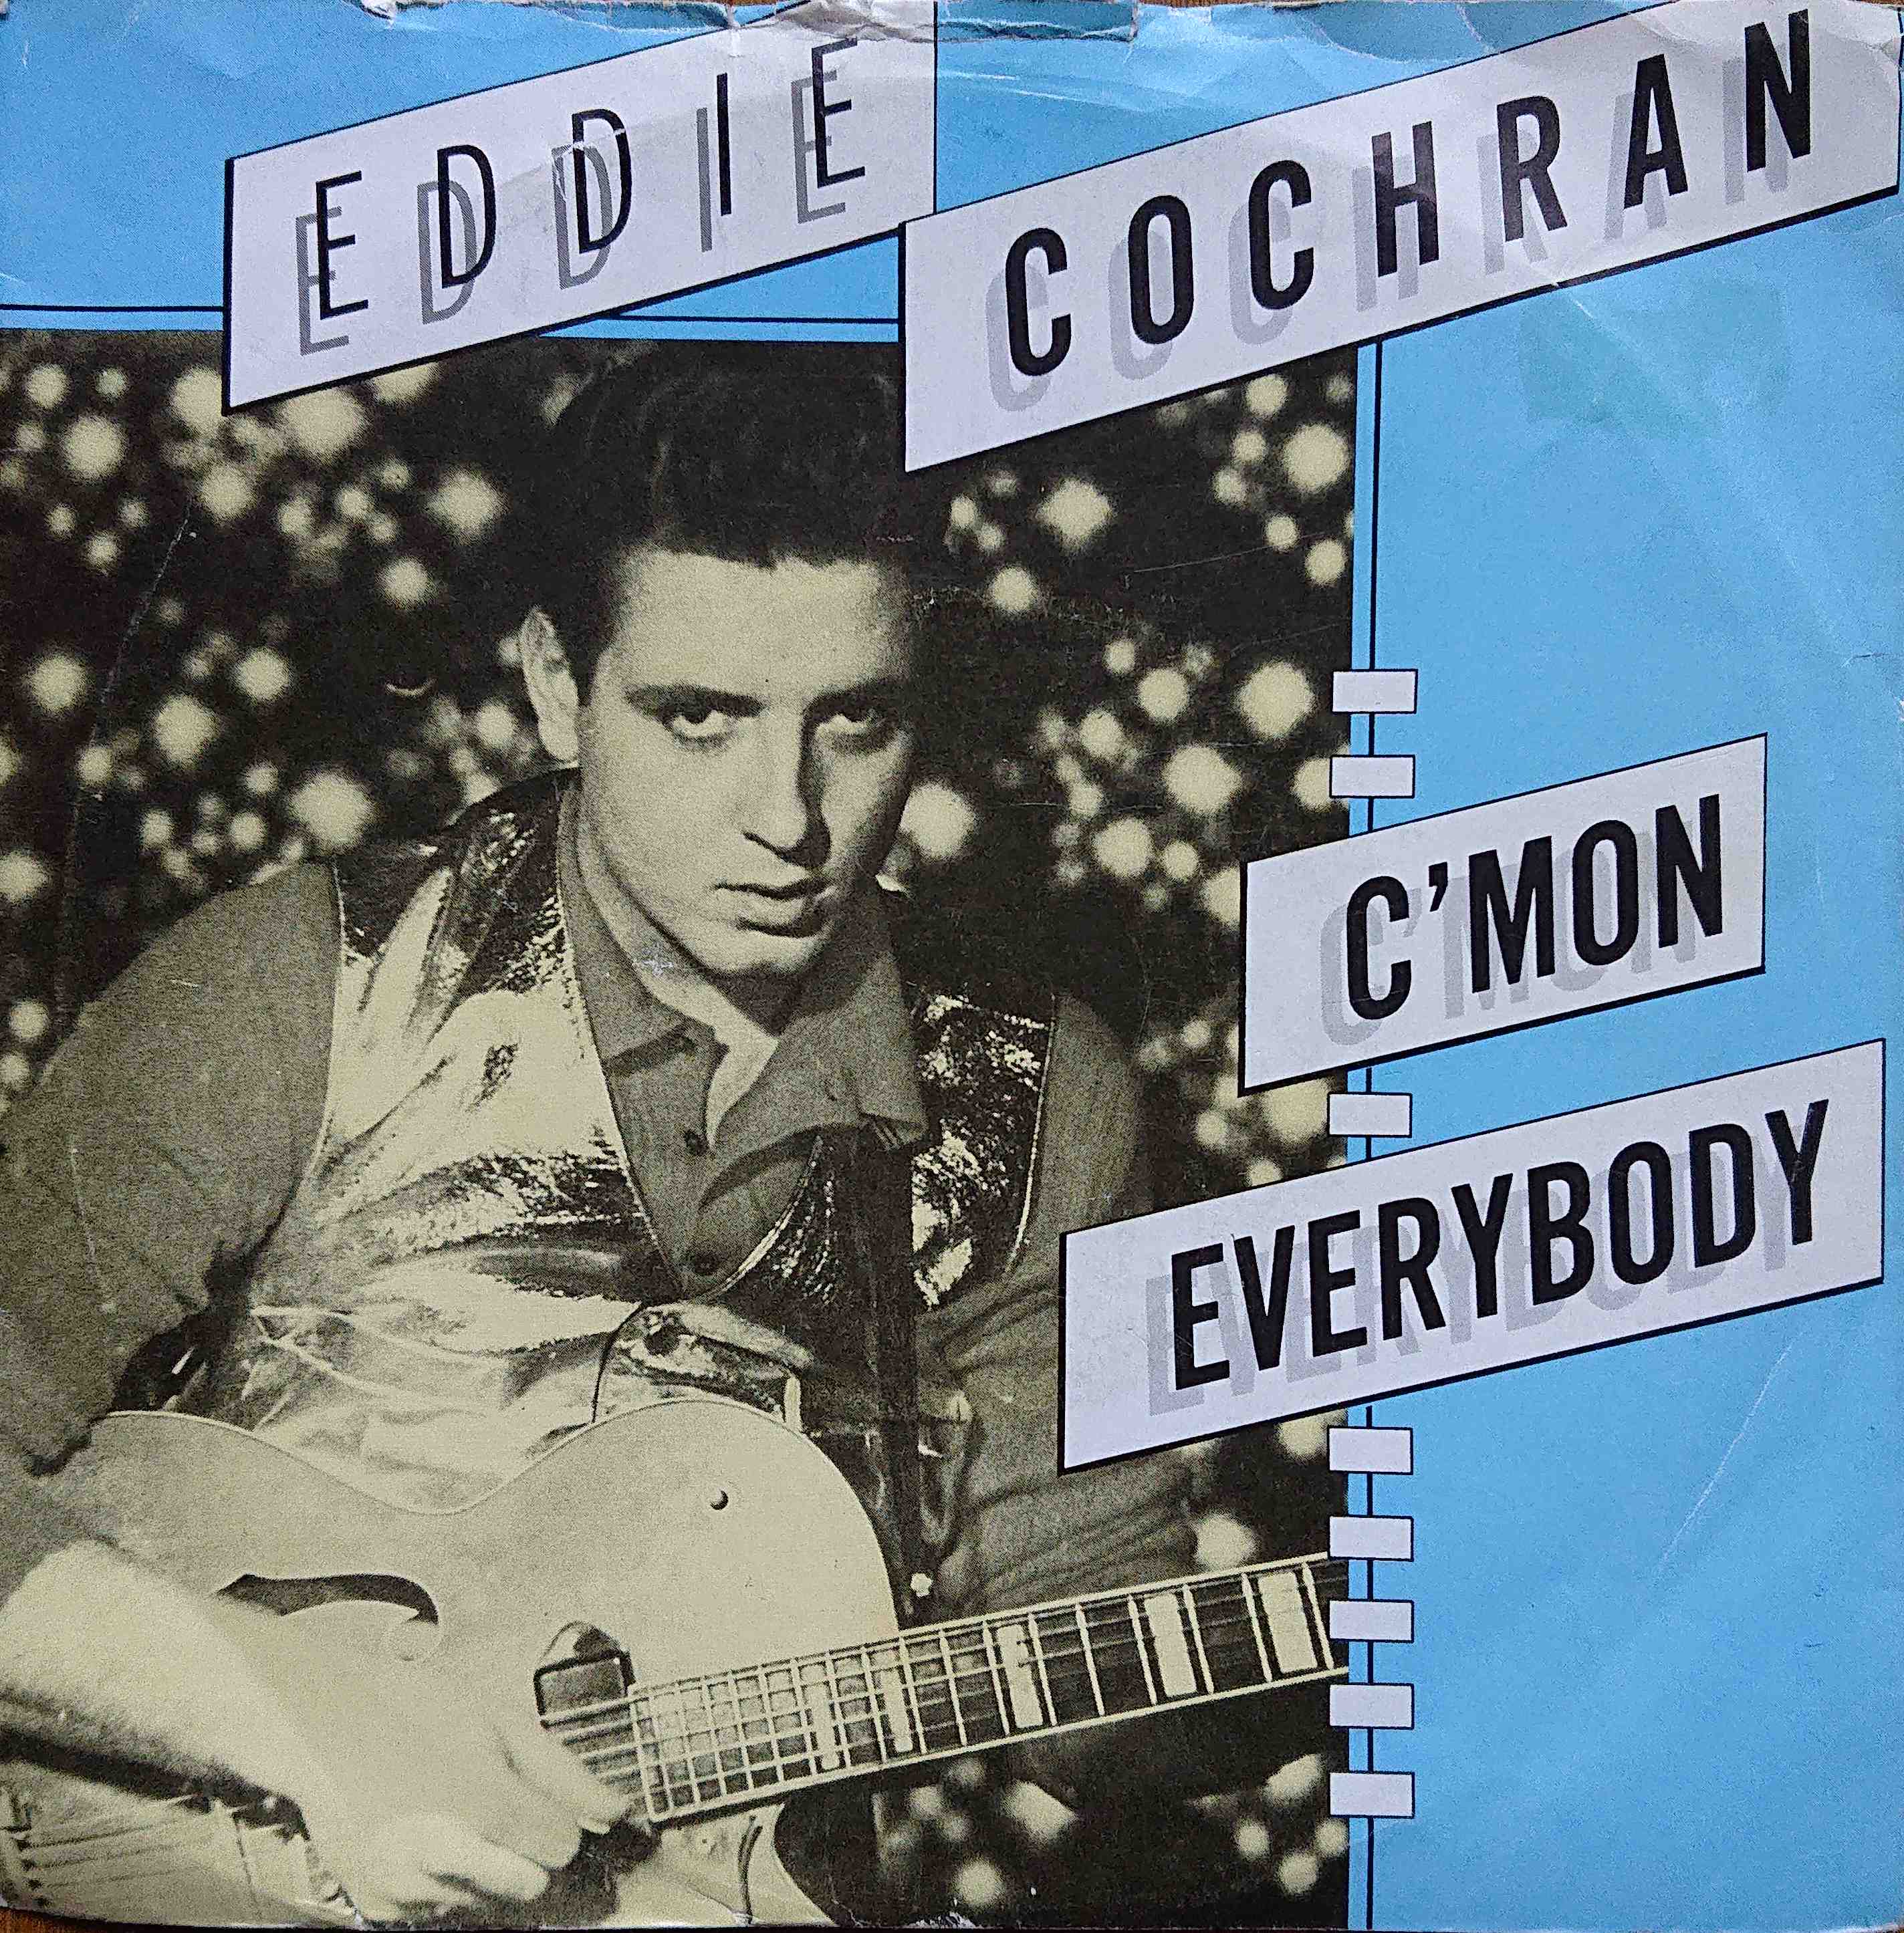 Picture of C'mon everybody by artist Eddie Cochran 